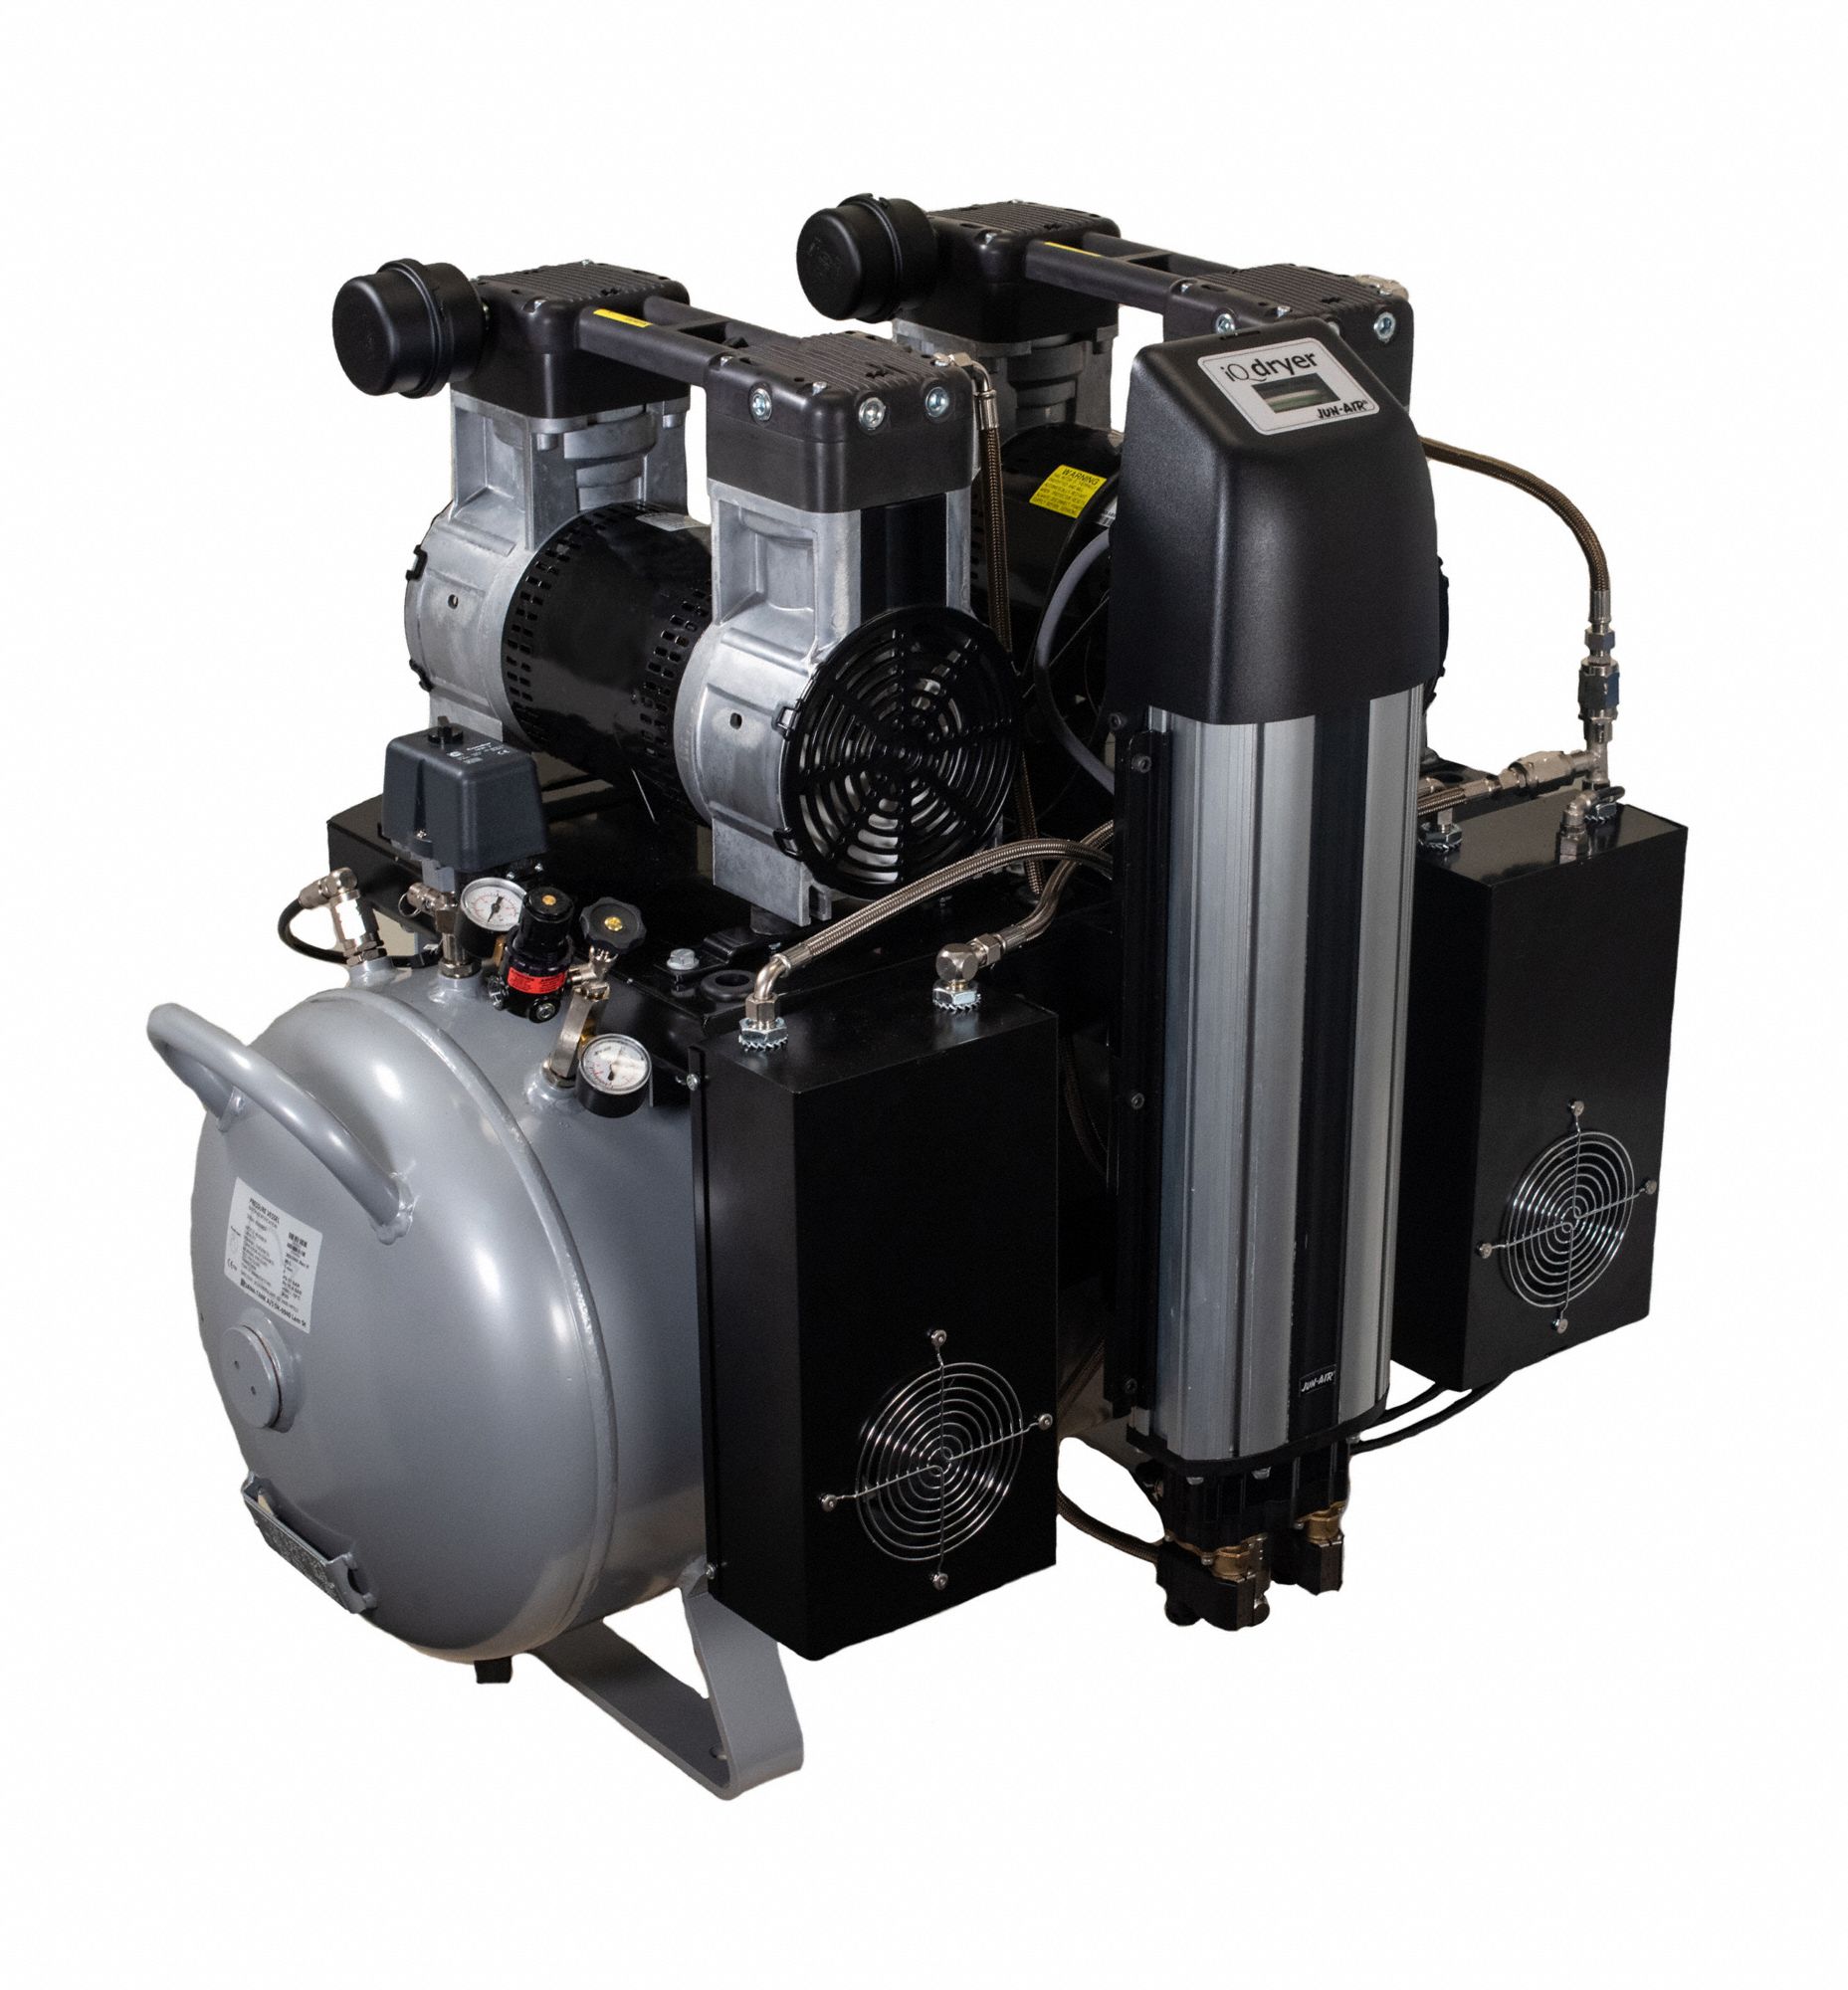 Electric Air Compressor: Oil Free, 4 hp, 7 cfm, 120 psi Max Op Pressure, 6.28 gal Tank